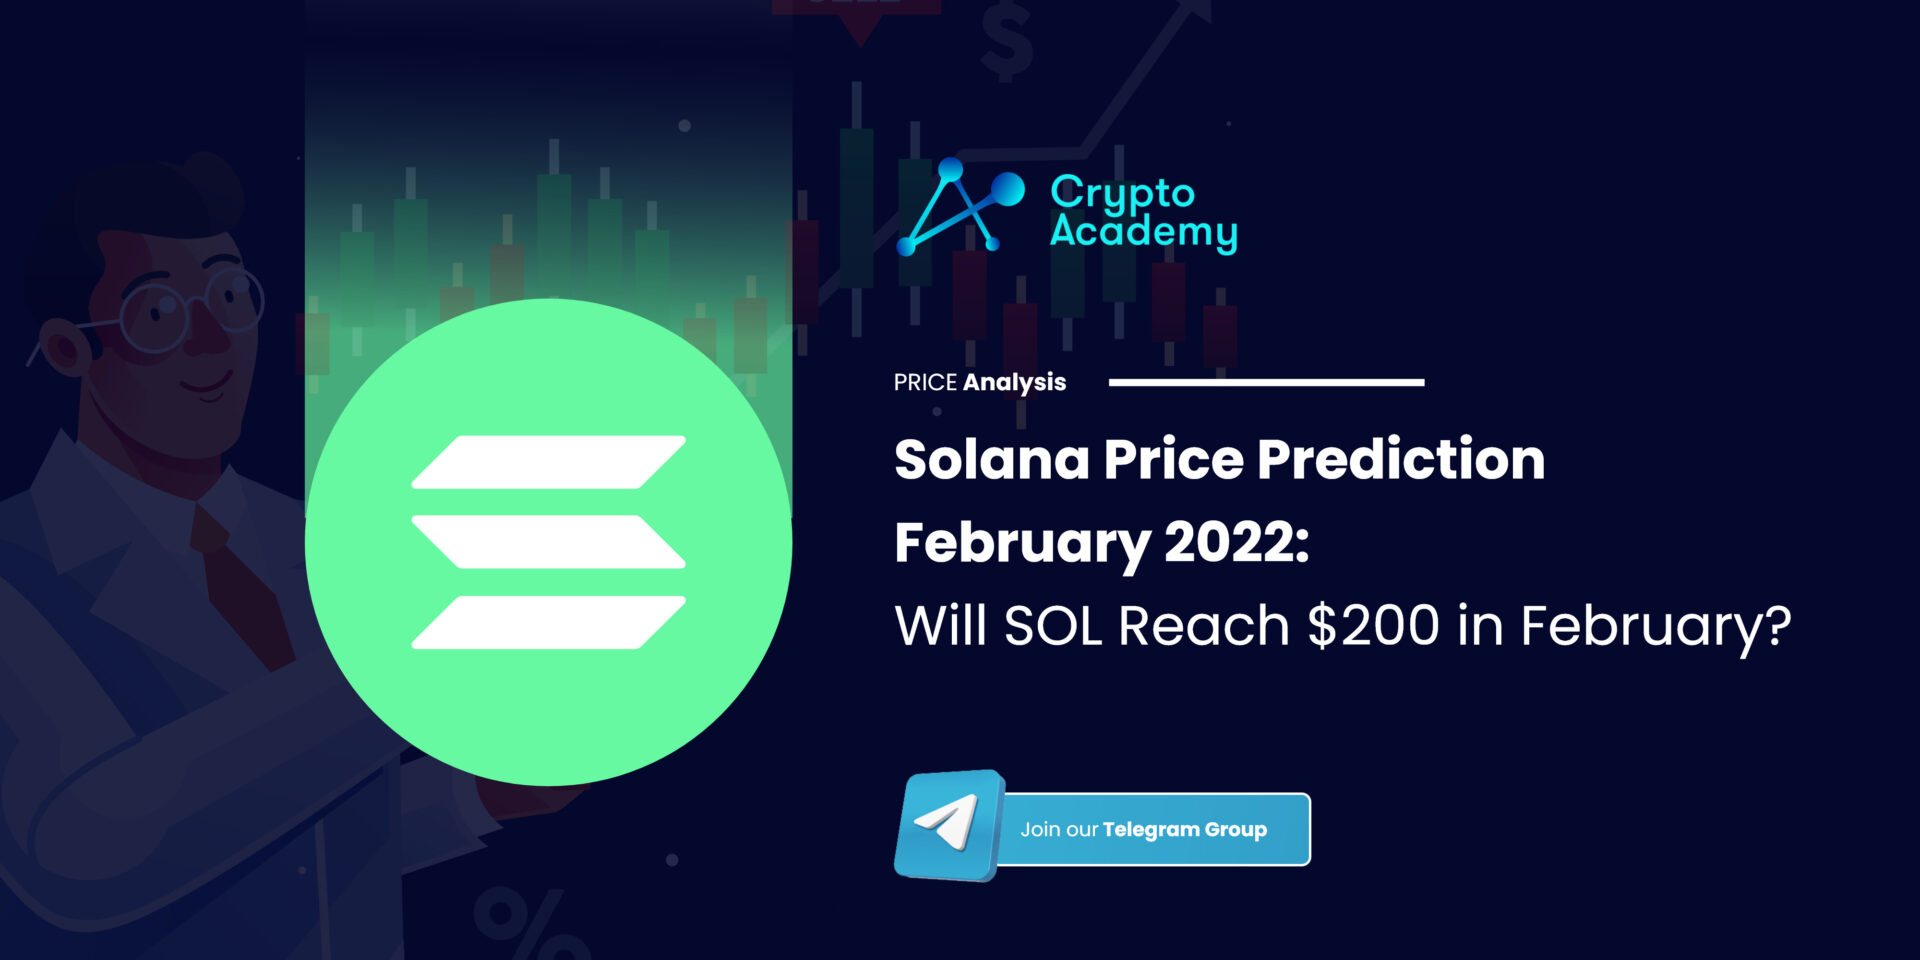 Solana Price Prediction February 2022: Will SOL Reach $200 in February?